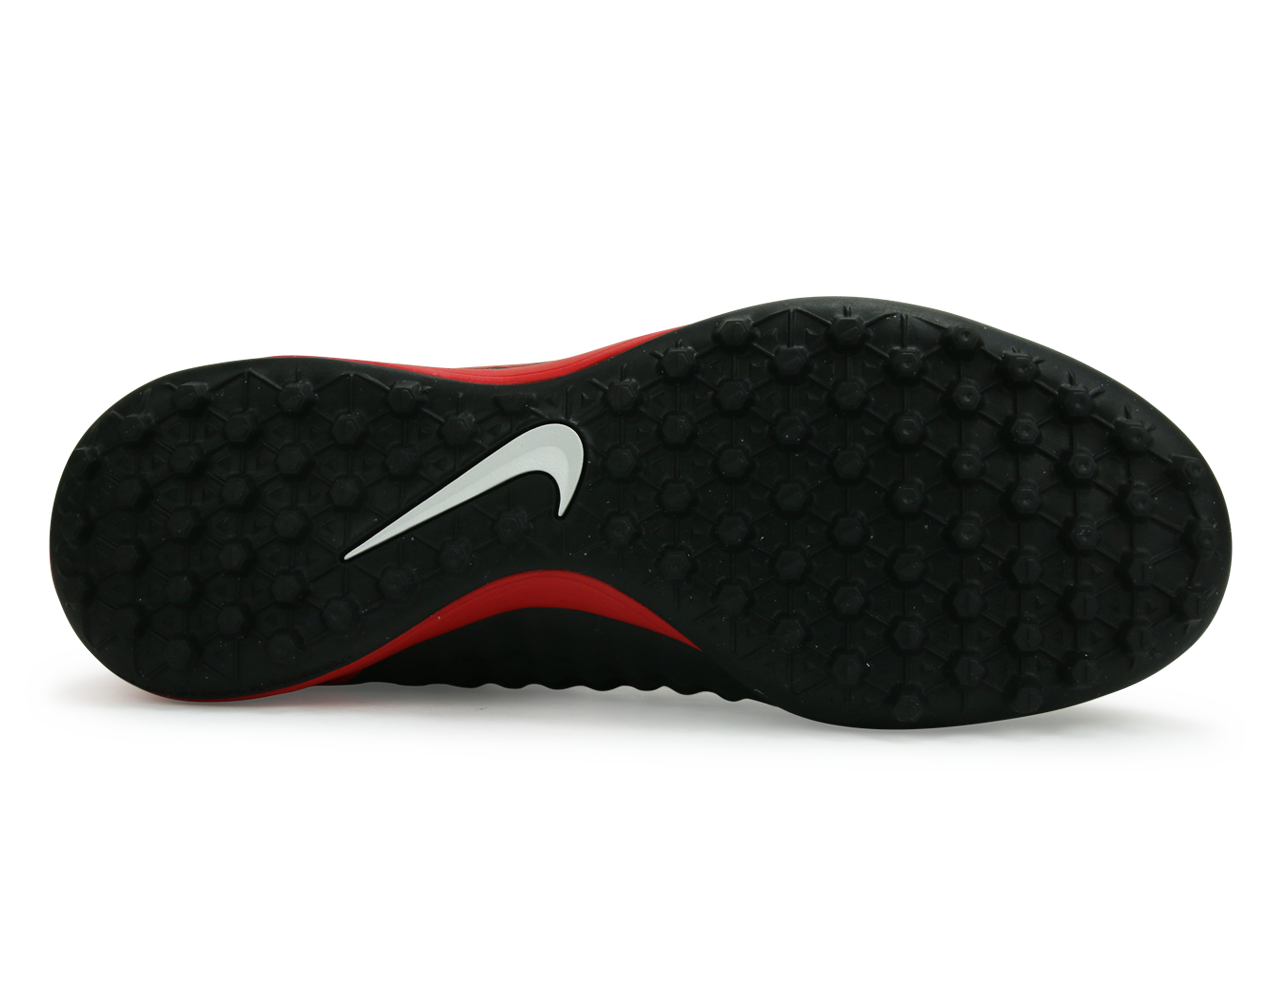 Nike Men's MagistaX Onda II DF Turf Shoes University Red/Black